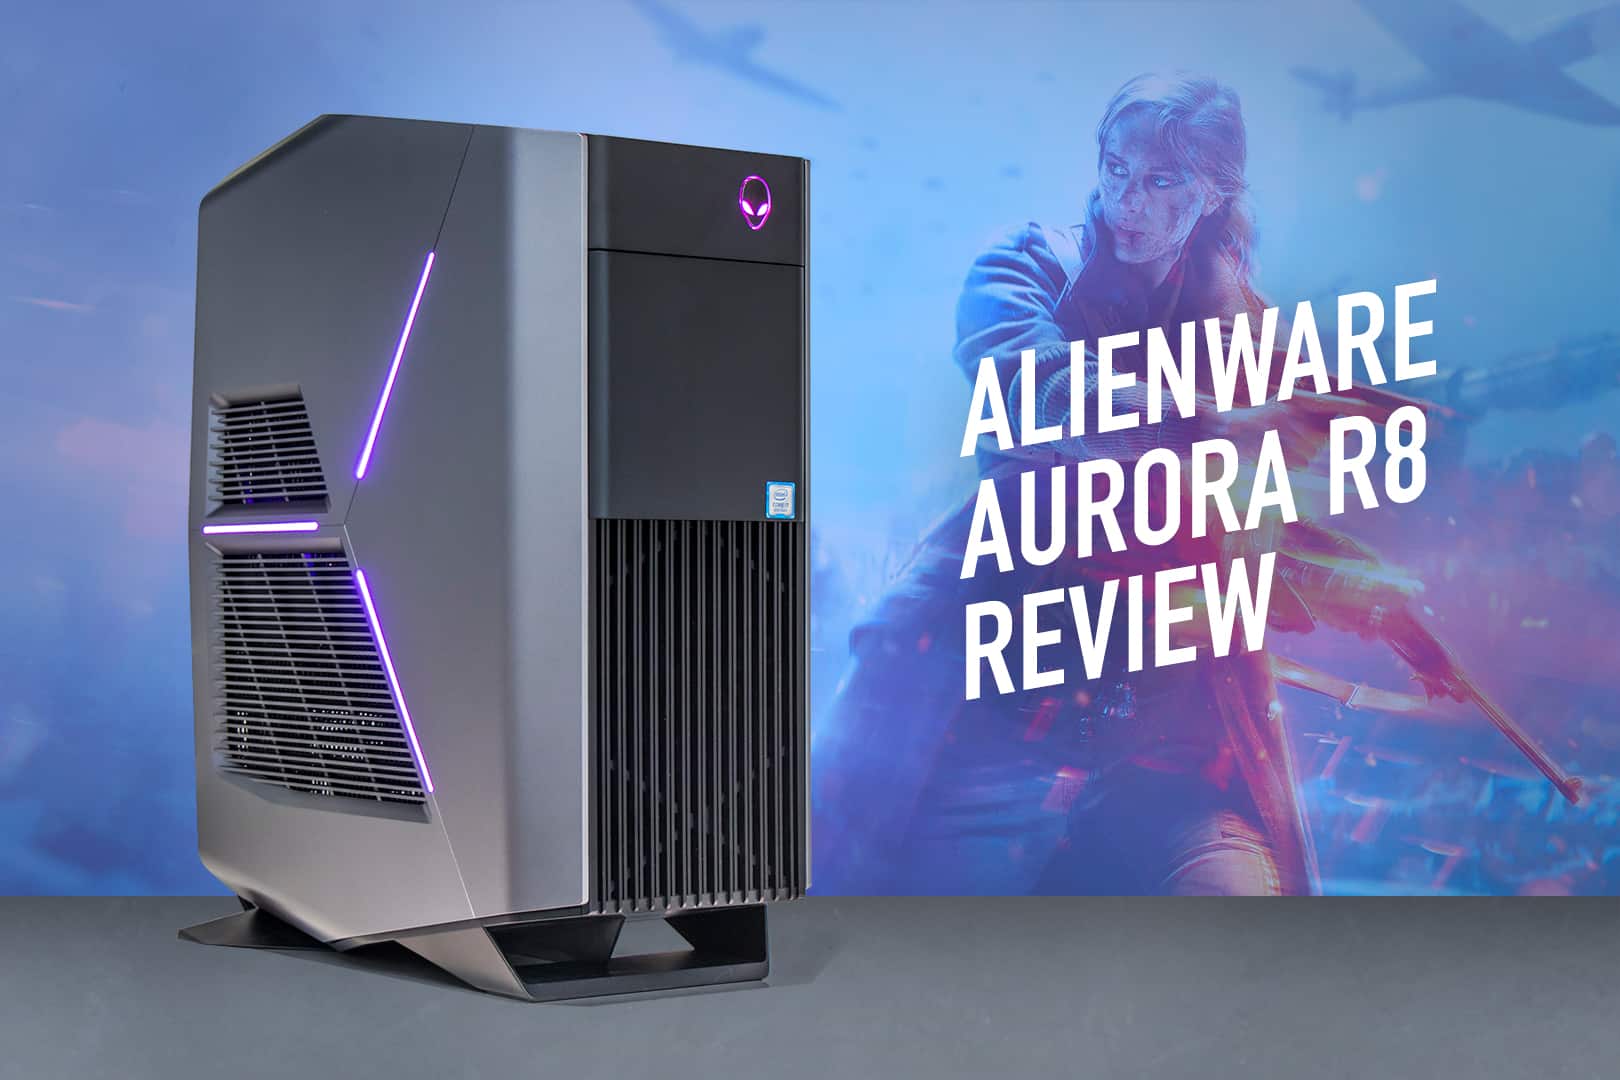 Alienware Aurora Gaming PC Review HighEnd Specs in a Sleek Package